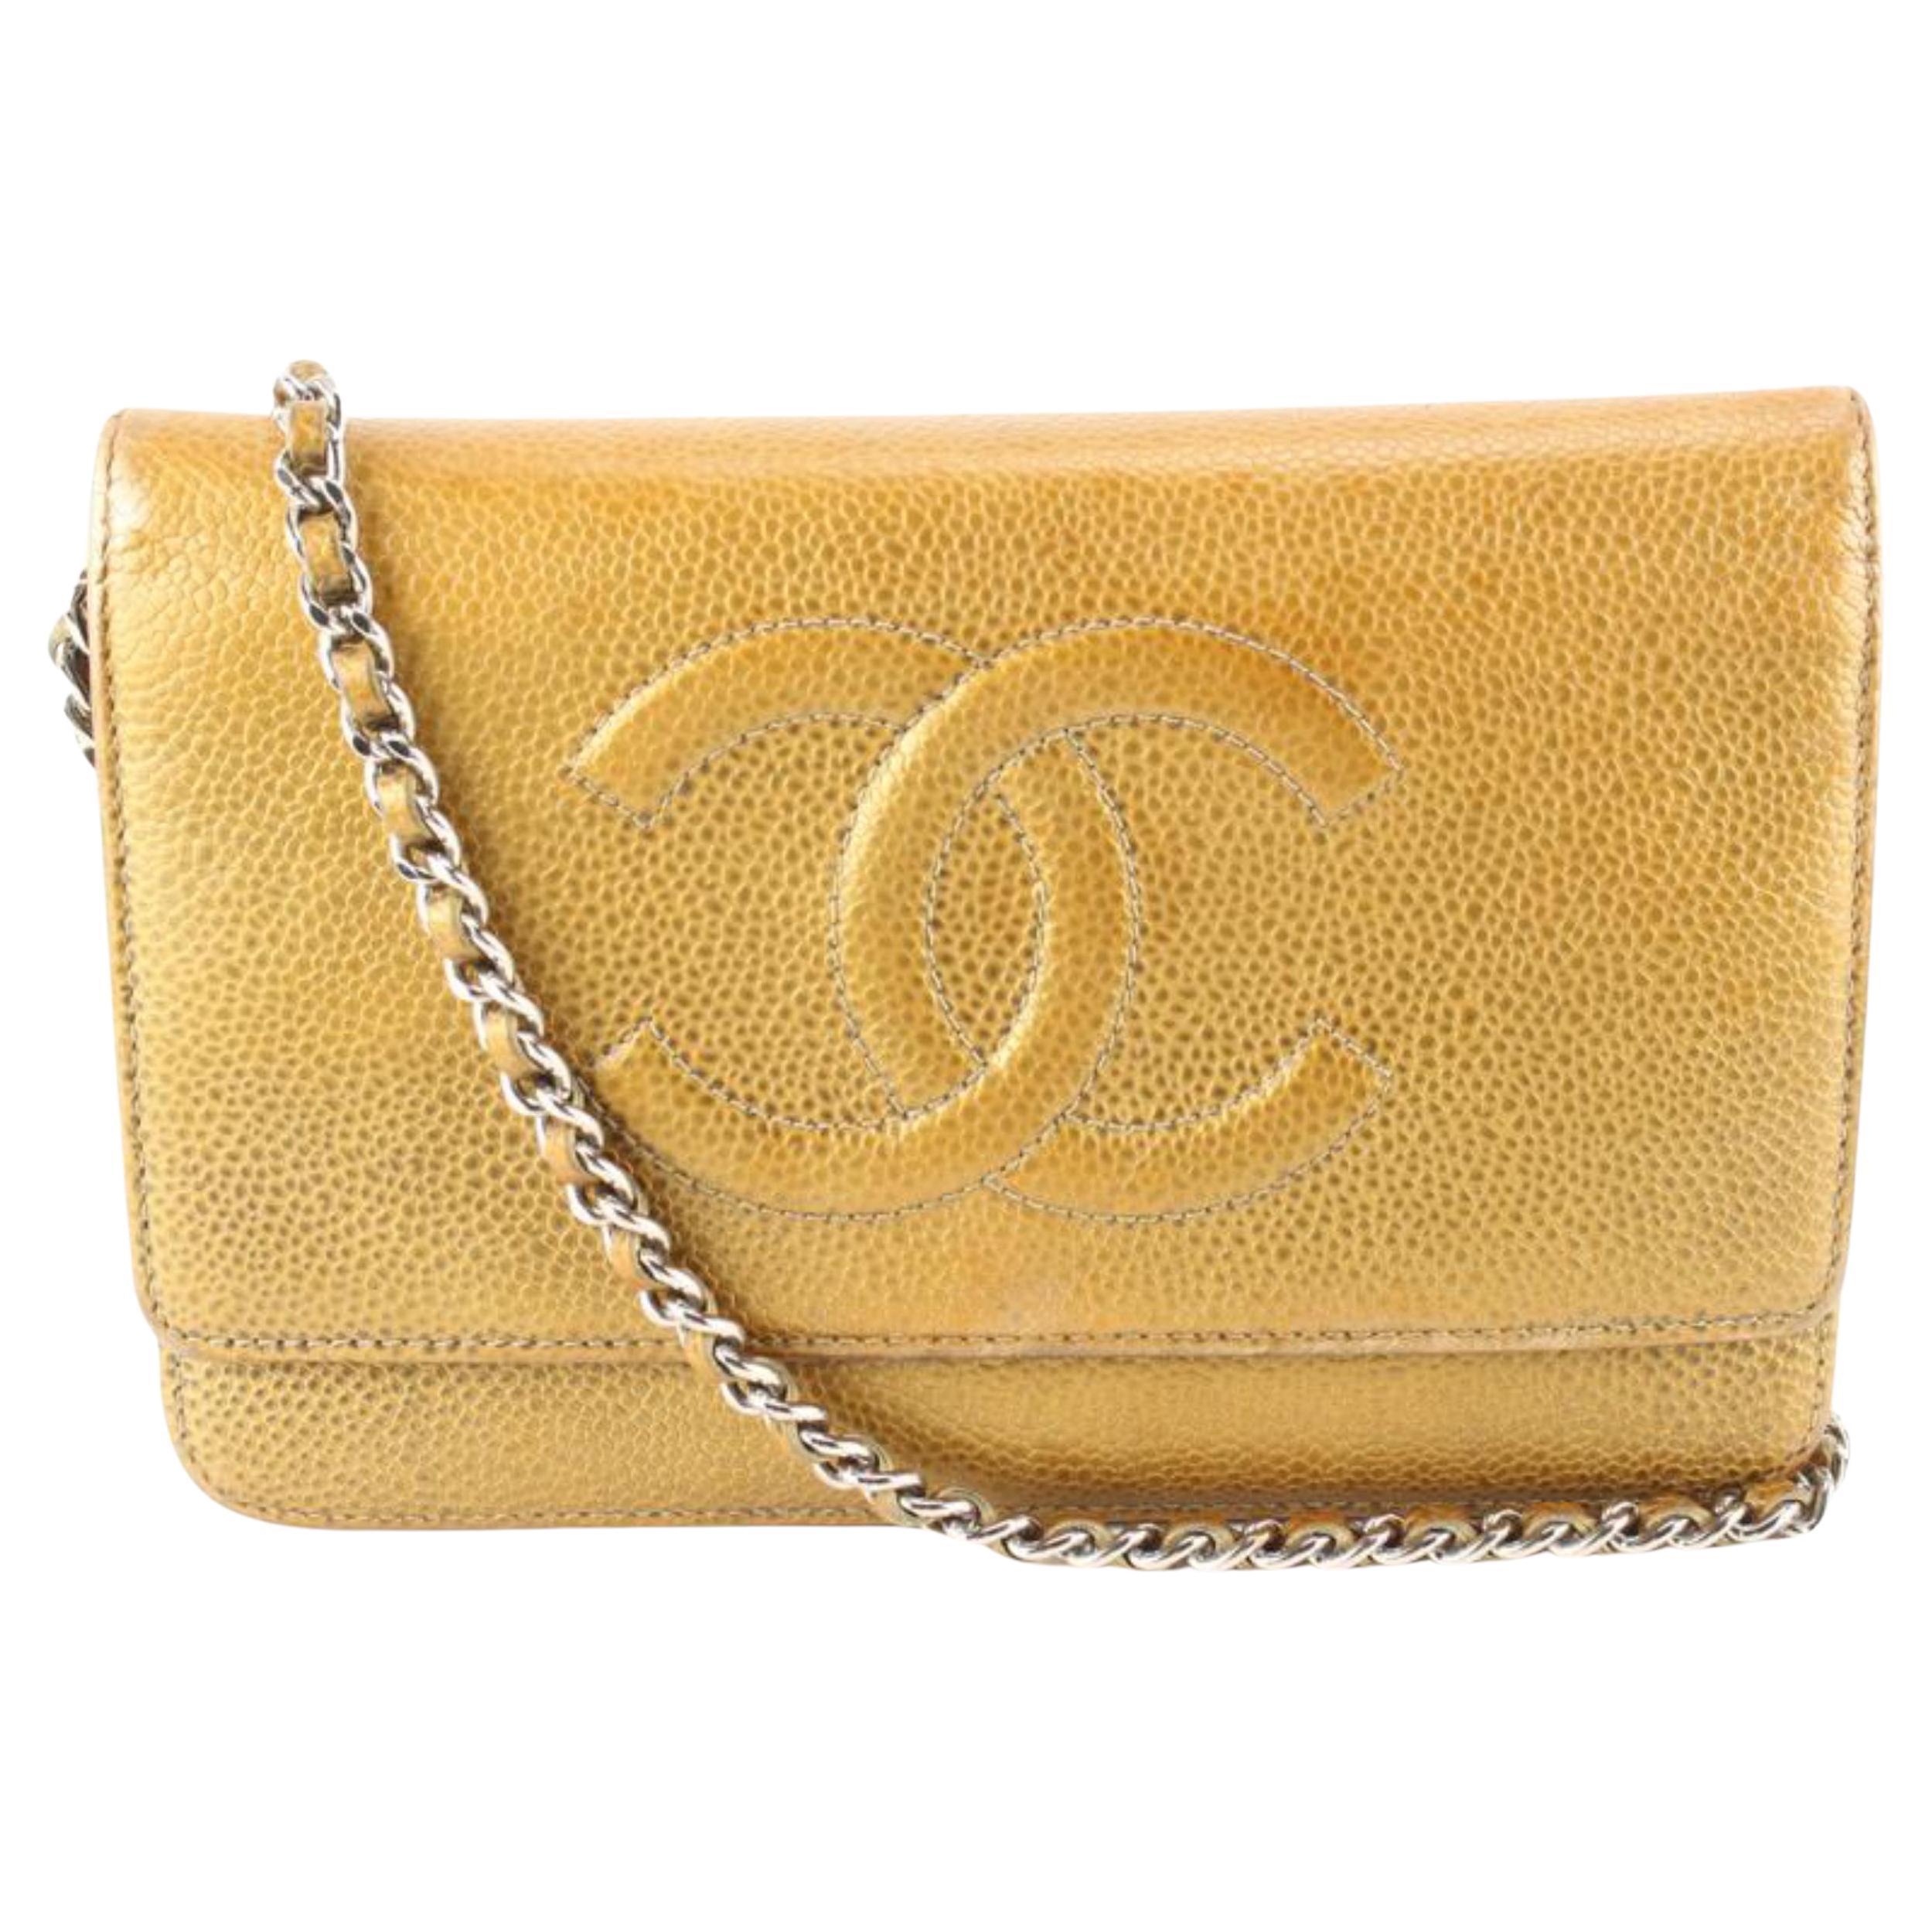 Chanel Bronze Caviar CC Logo Timeless Wallet on Chain WOC 36ck624s